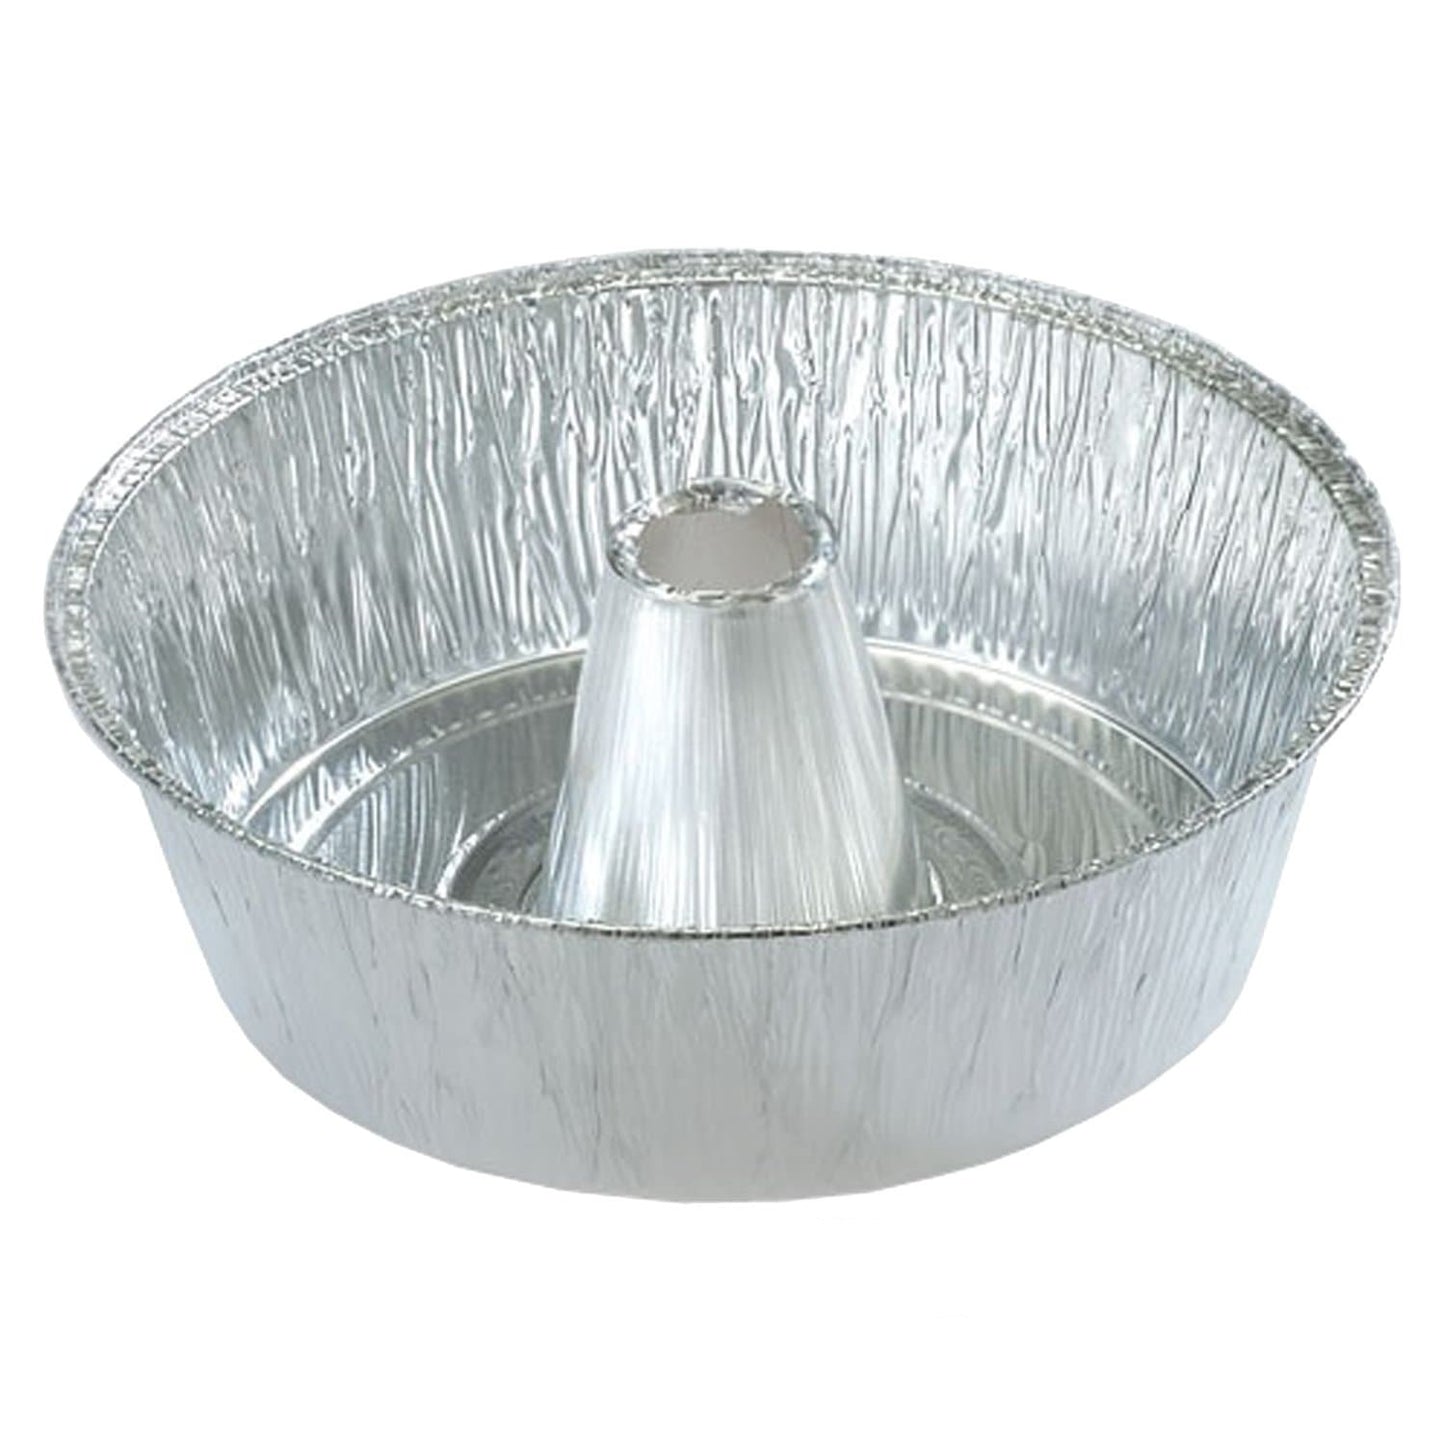 10 Disposable Round Cake Baking Pans - Aluminum Foil Bundt Tube Tin Great  for Baking Decorative Display - Heavy Duty Aluminum Pan for Fruitcake